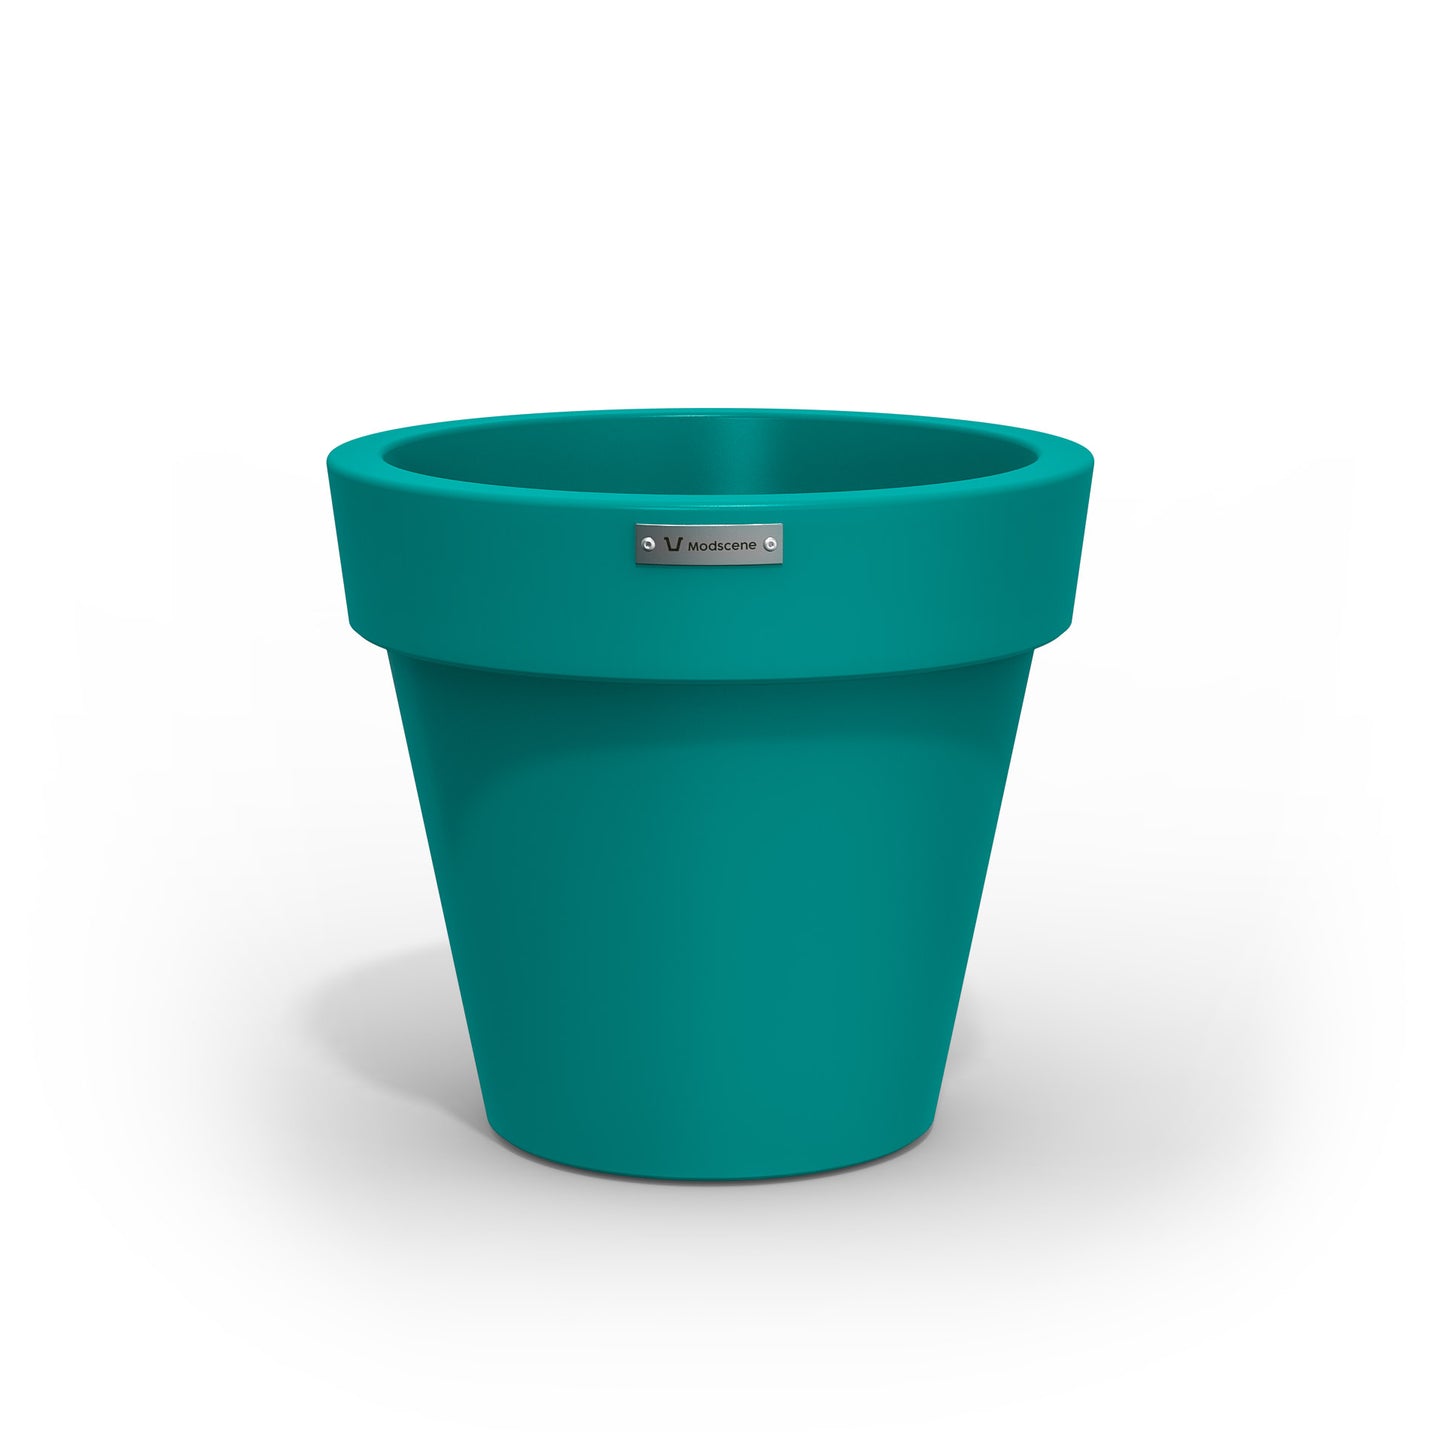 A small teal planter pot made by Modscene. Australian pots.